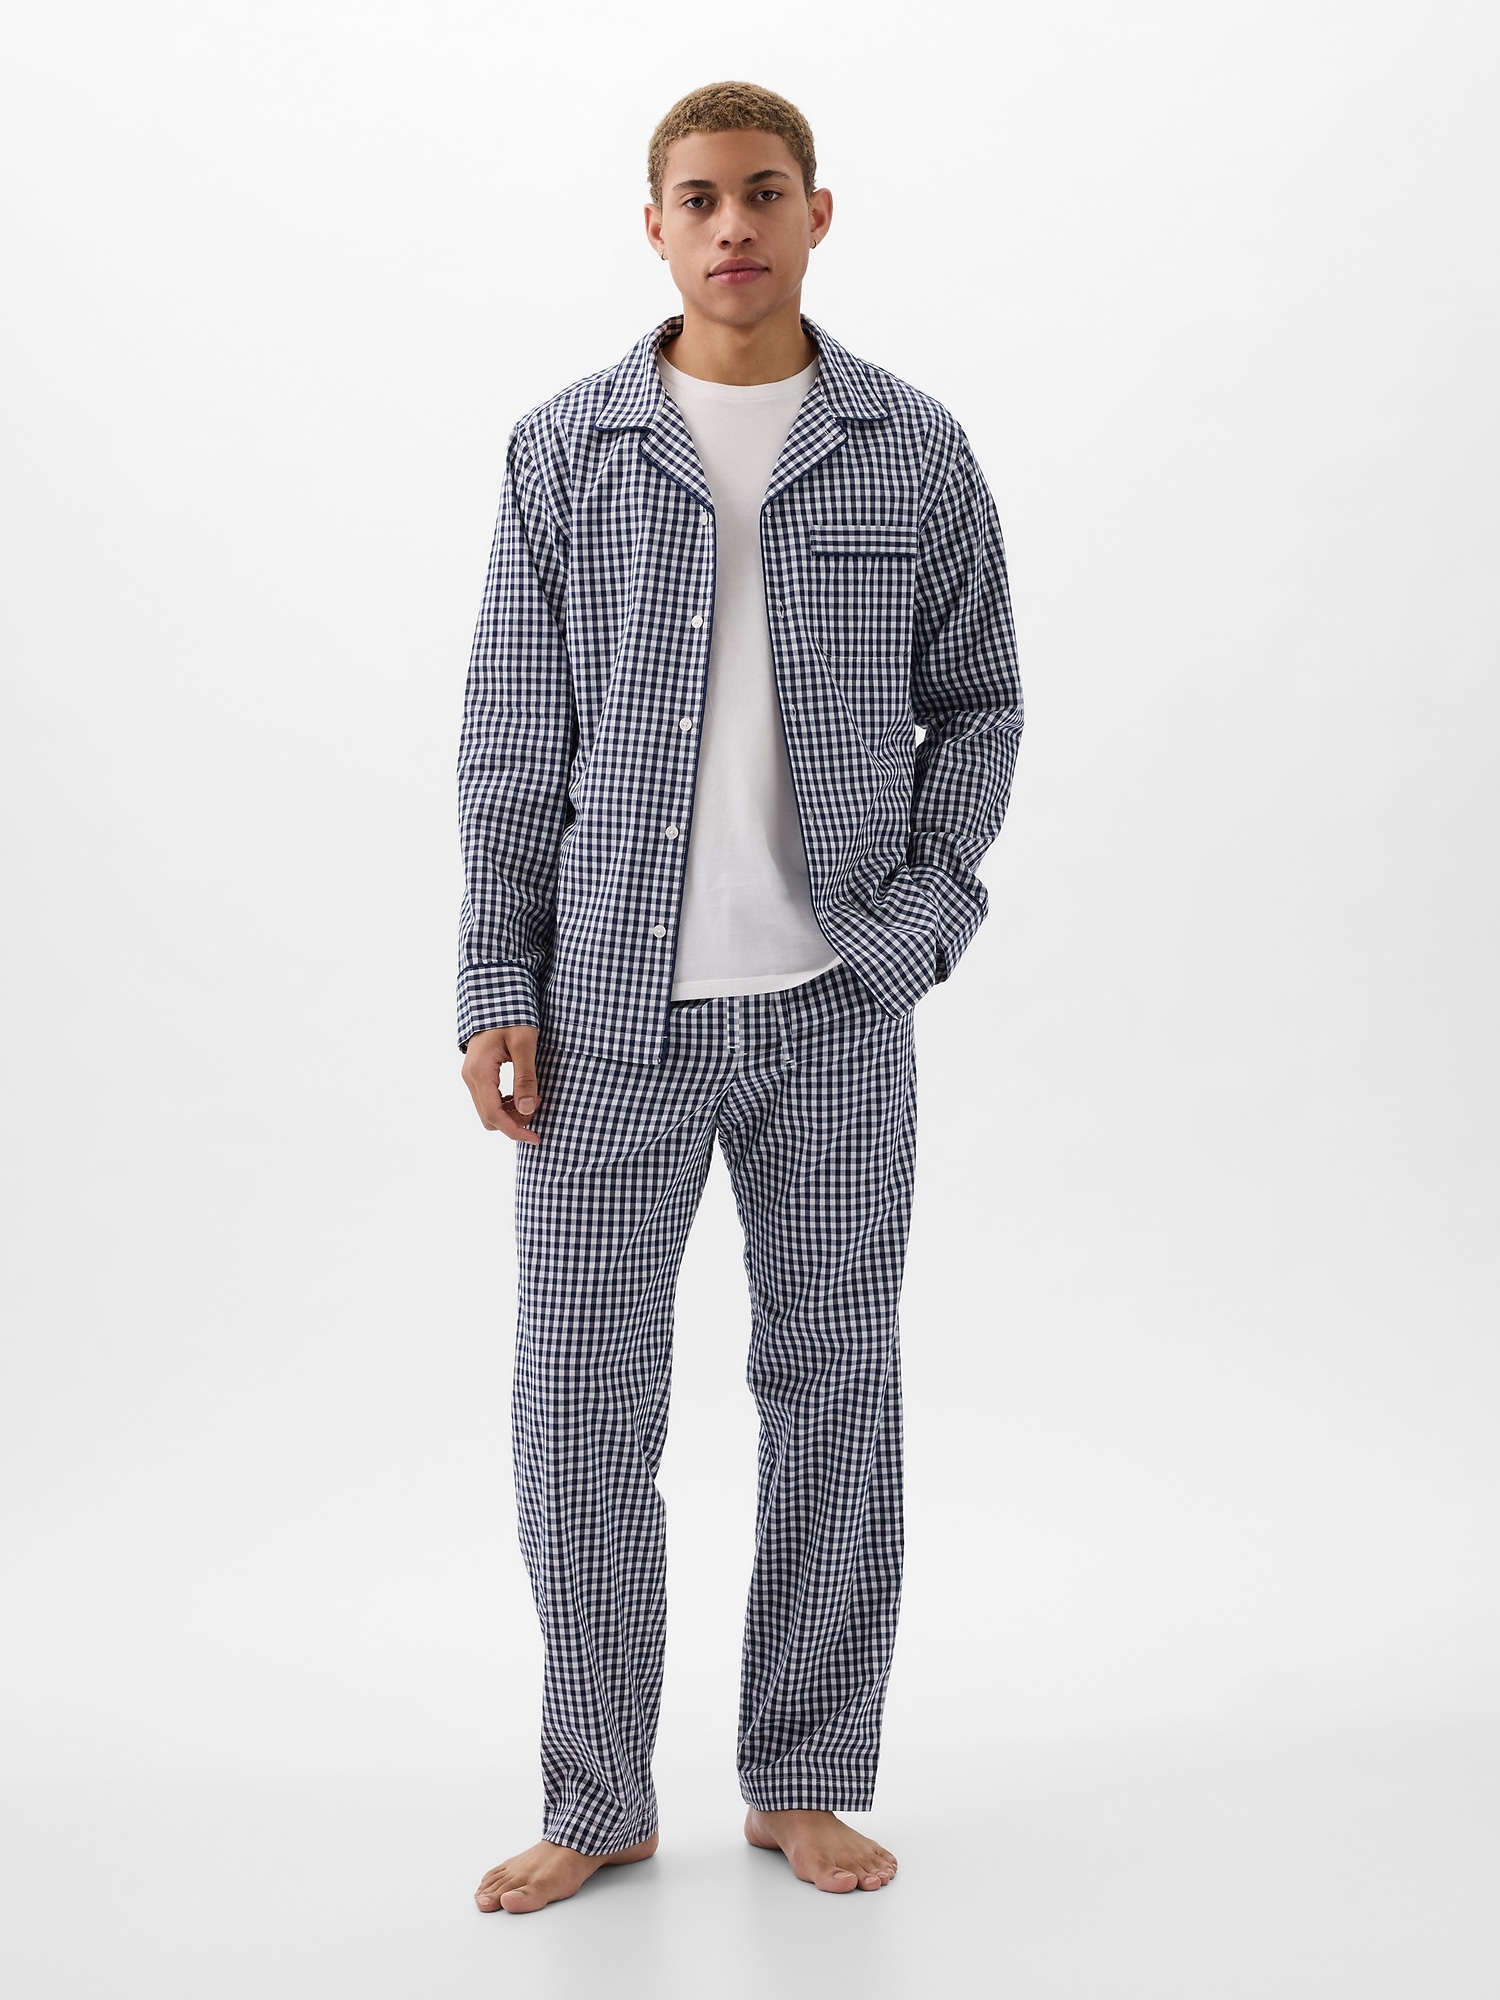 2-pack Relaxed Fit Poplin Pajama Pants - White/dark gray - Men